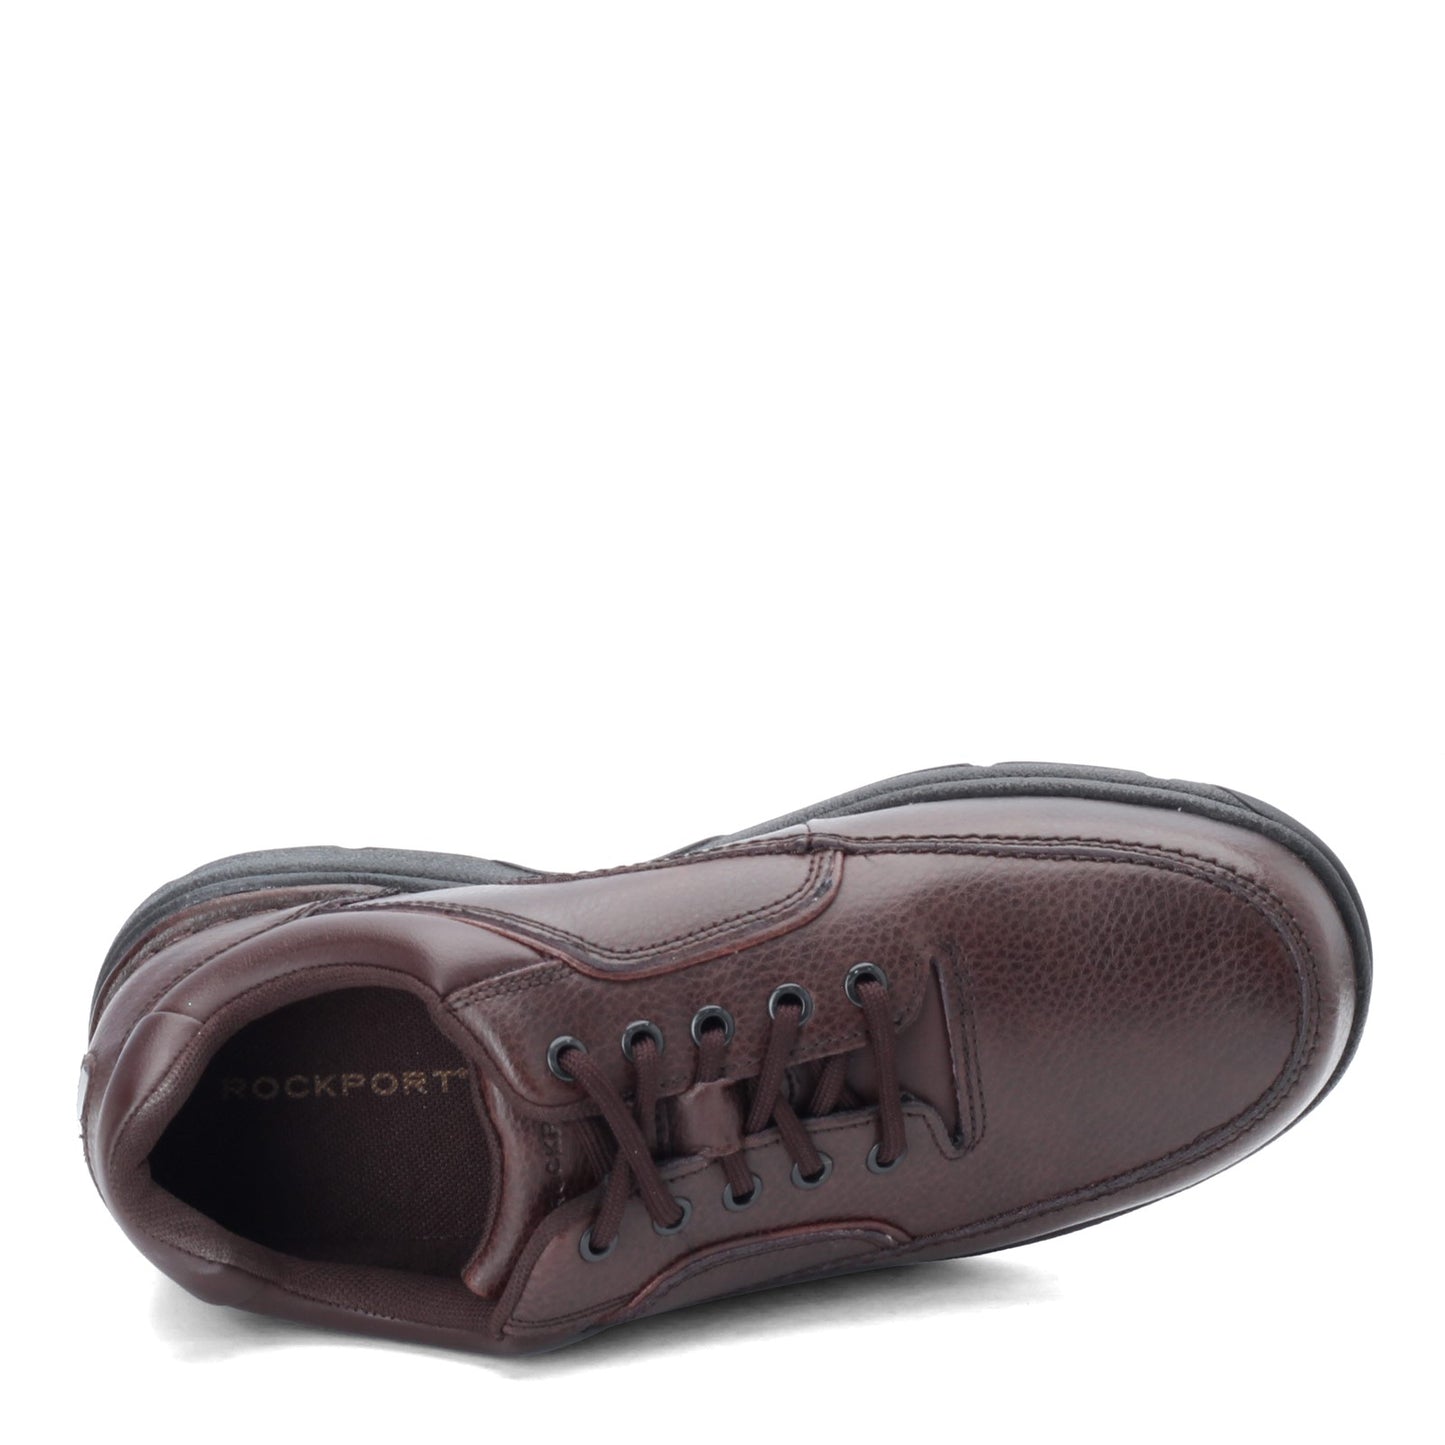 Peltz Shoes  Men's Rockport Eureka Oxford BROWN MEDIUM K71201